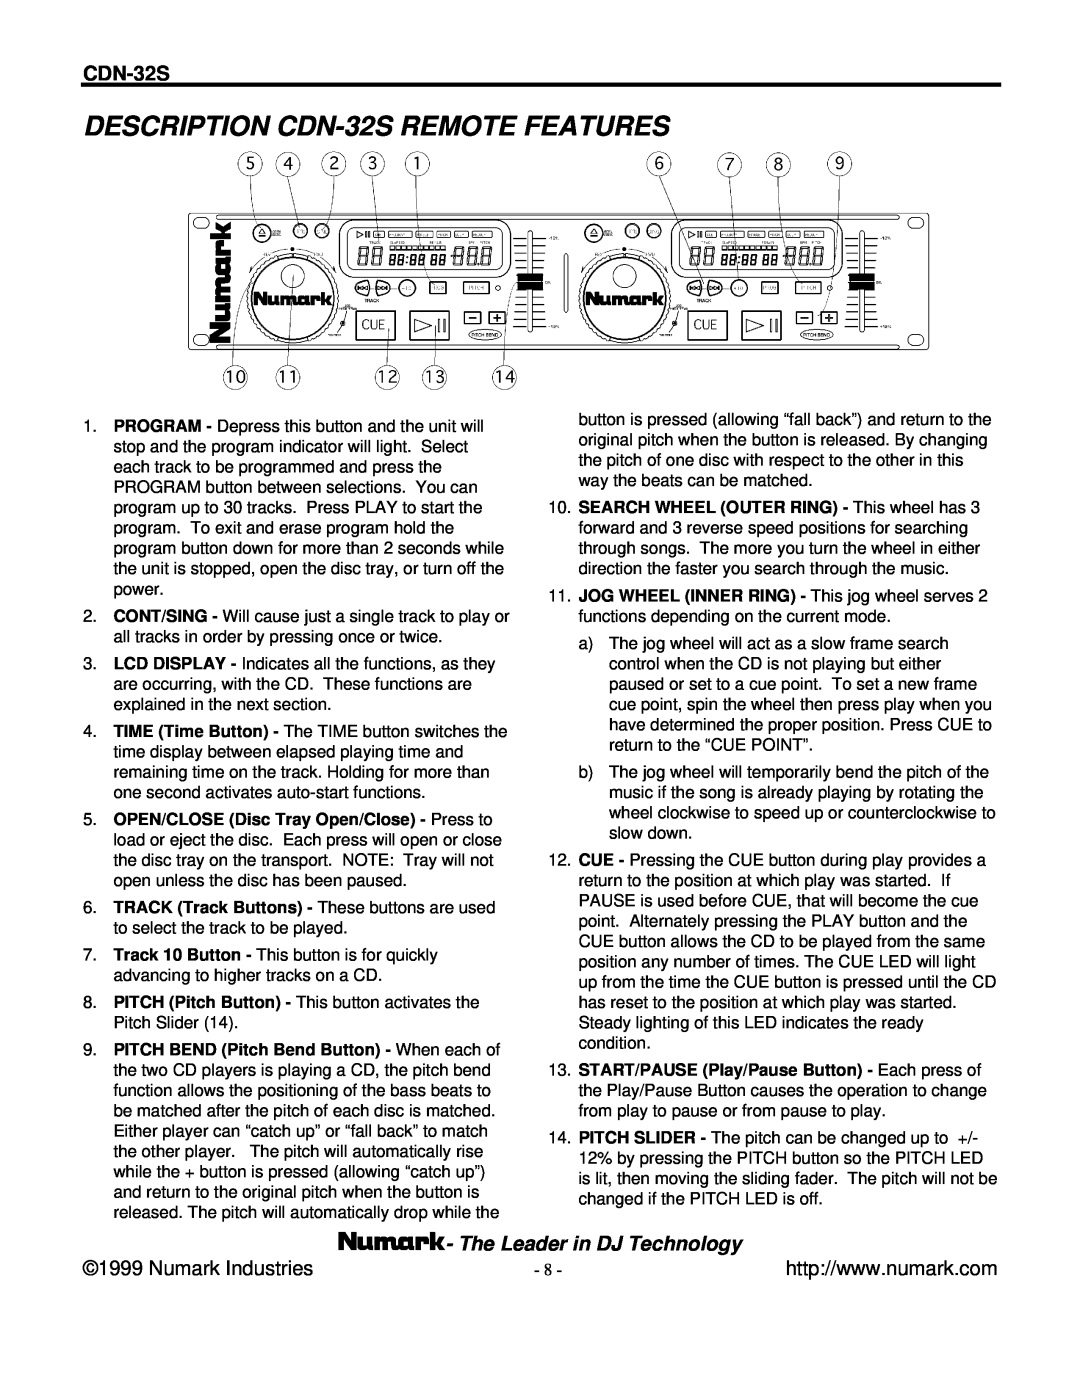 Numark Industries manual DESCRIPTION CDN-32SREMOTE FEATURES, The Leader in DJ Technology 